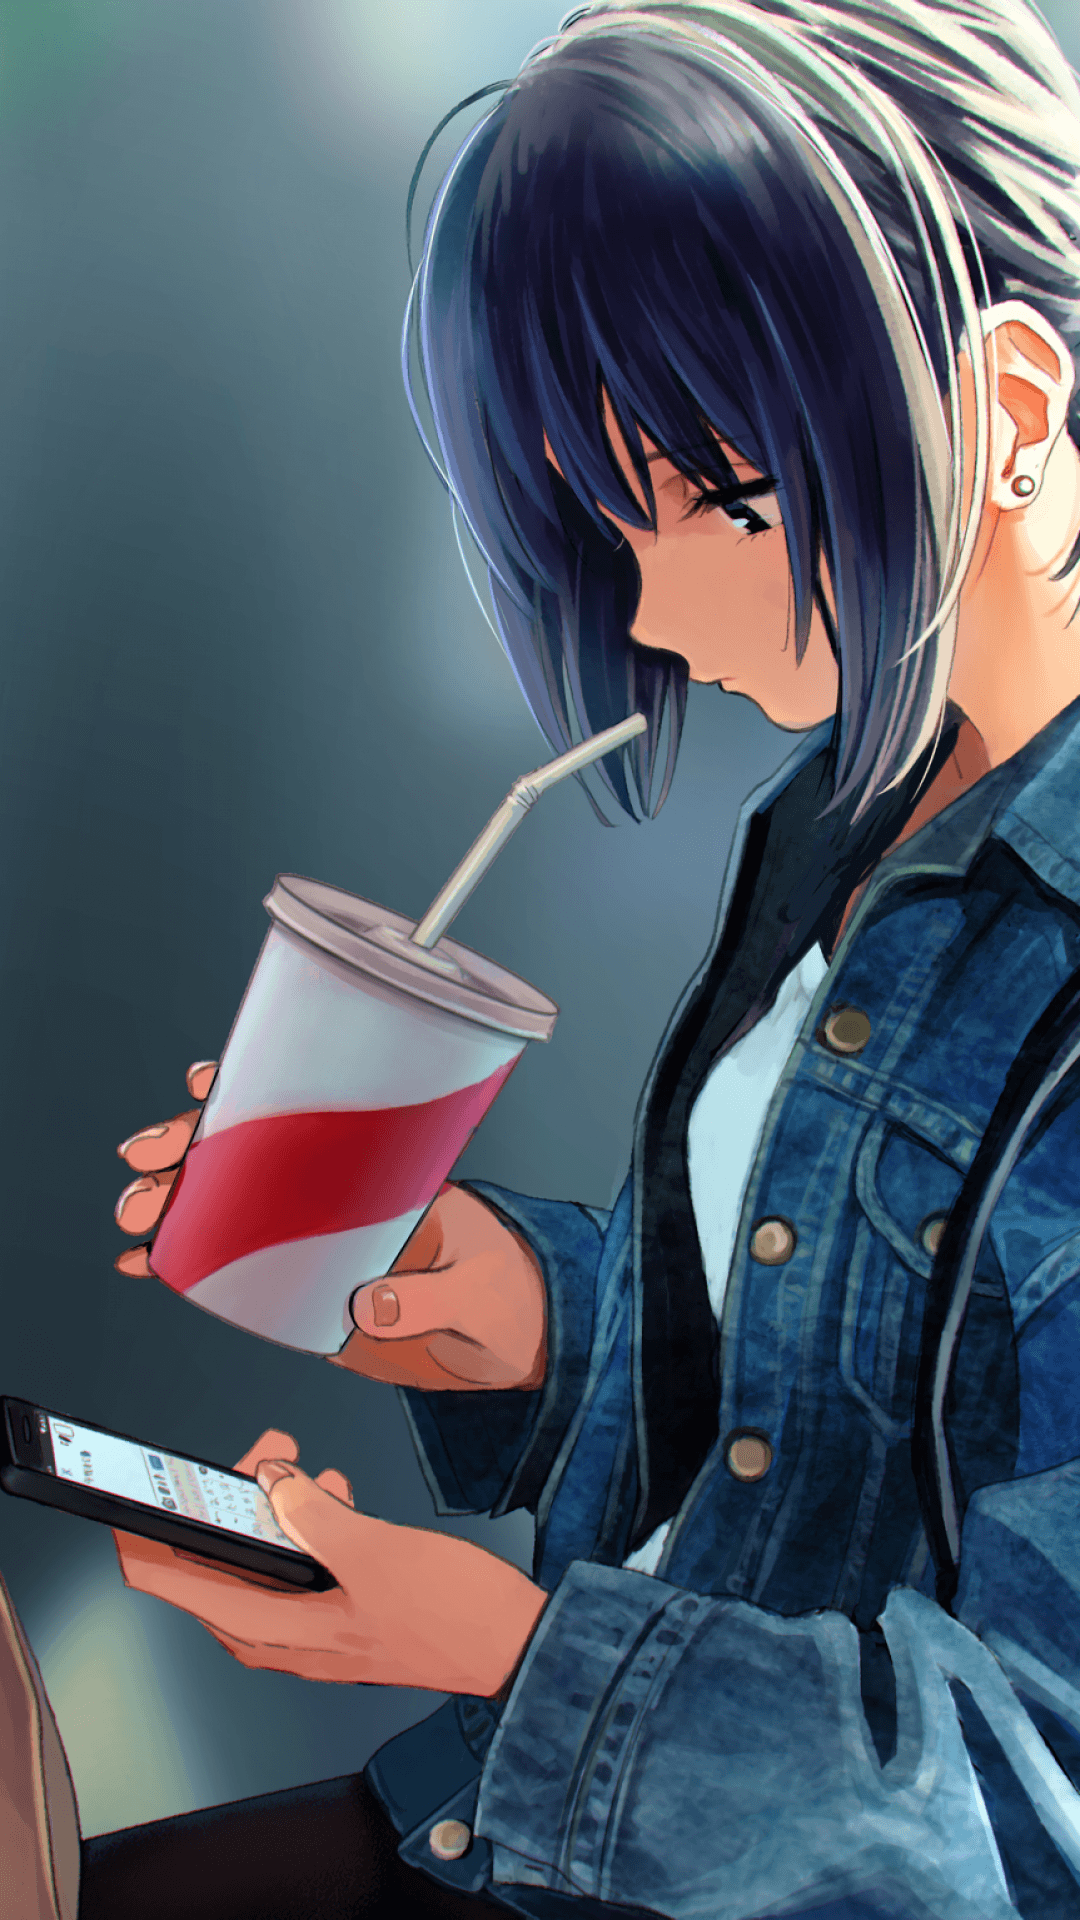 Anime Girl Iphone Wallpapers